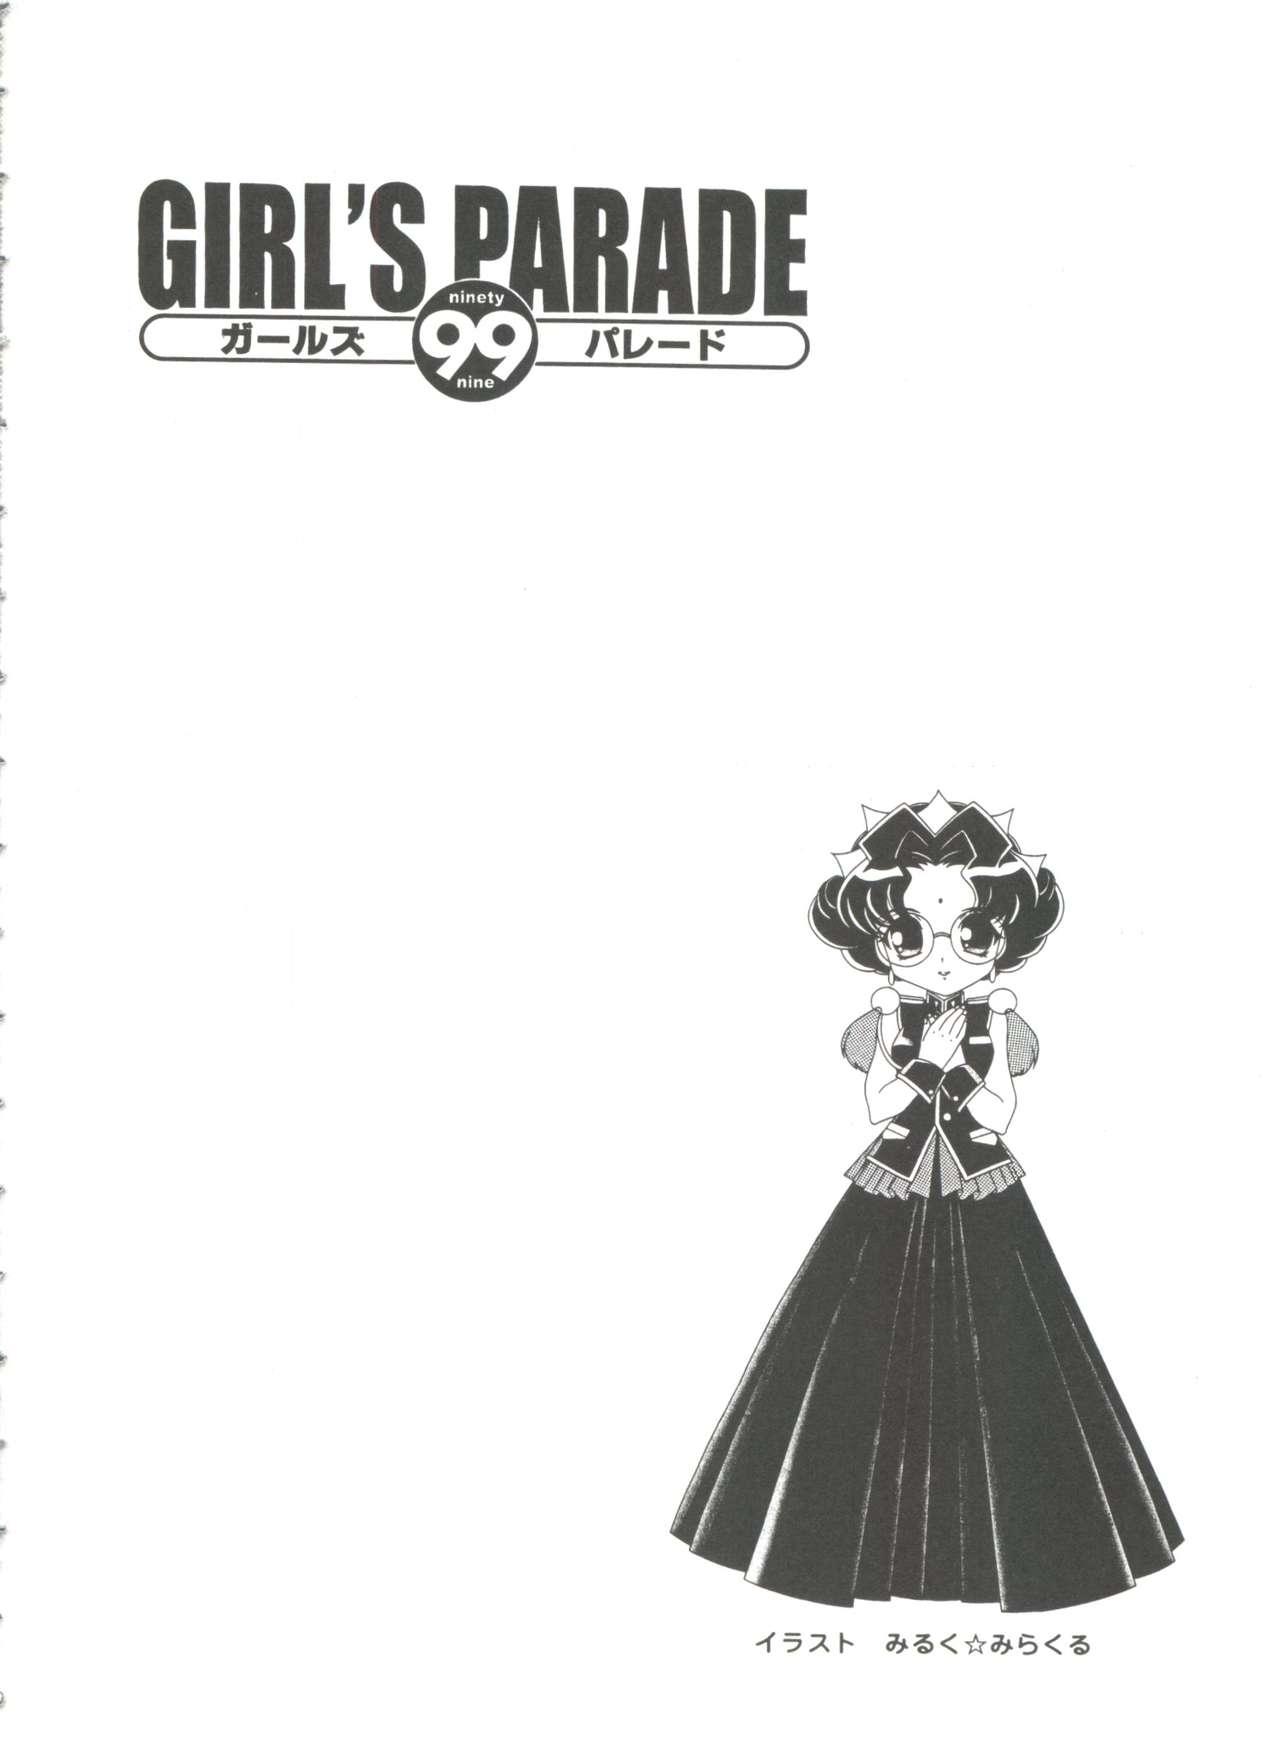 Girl's Parade 99 Cut 10 75